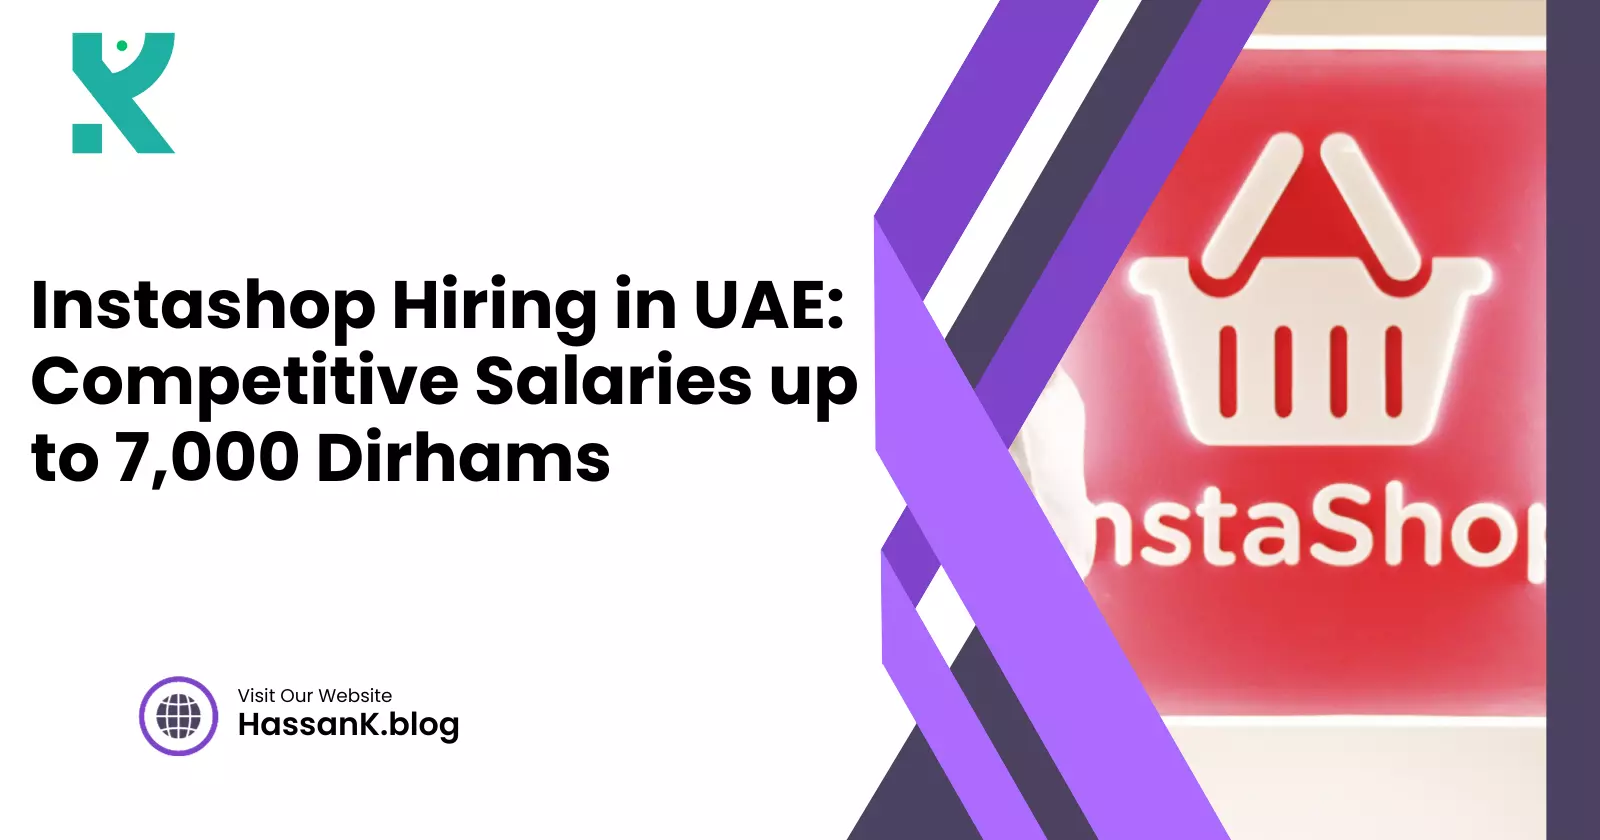 Instashop Hiring in UAE Competitive Salaries up to 7,000 Dirhams